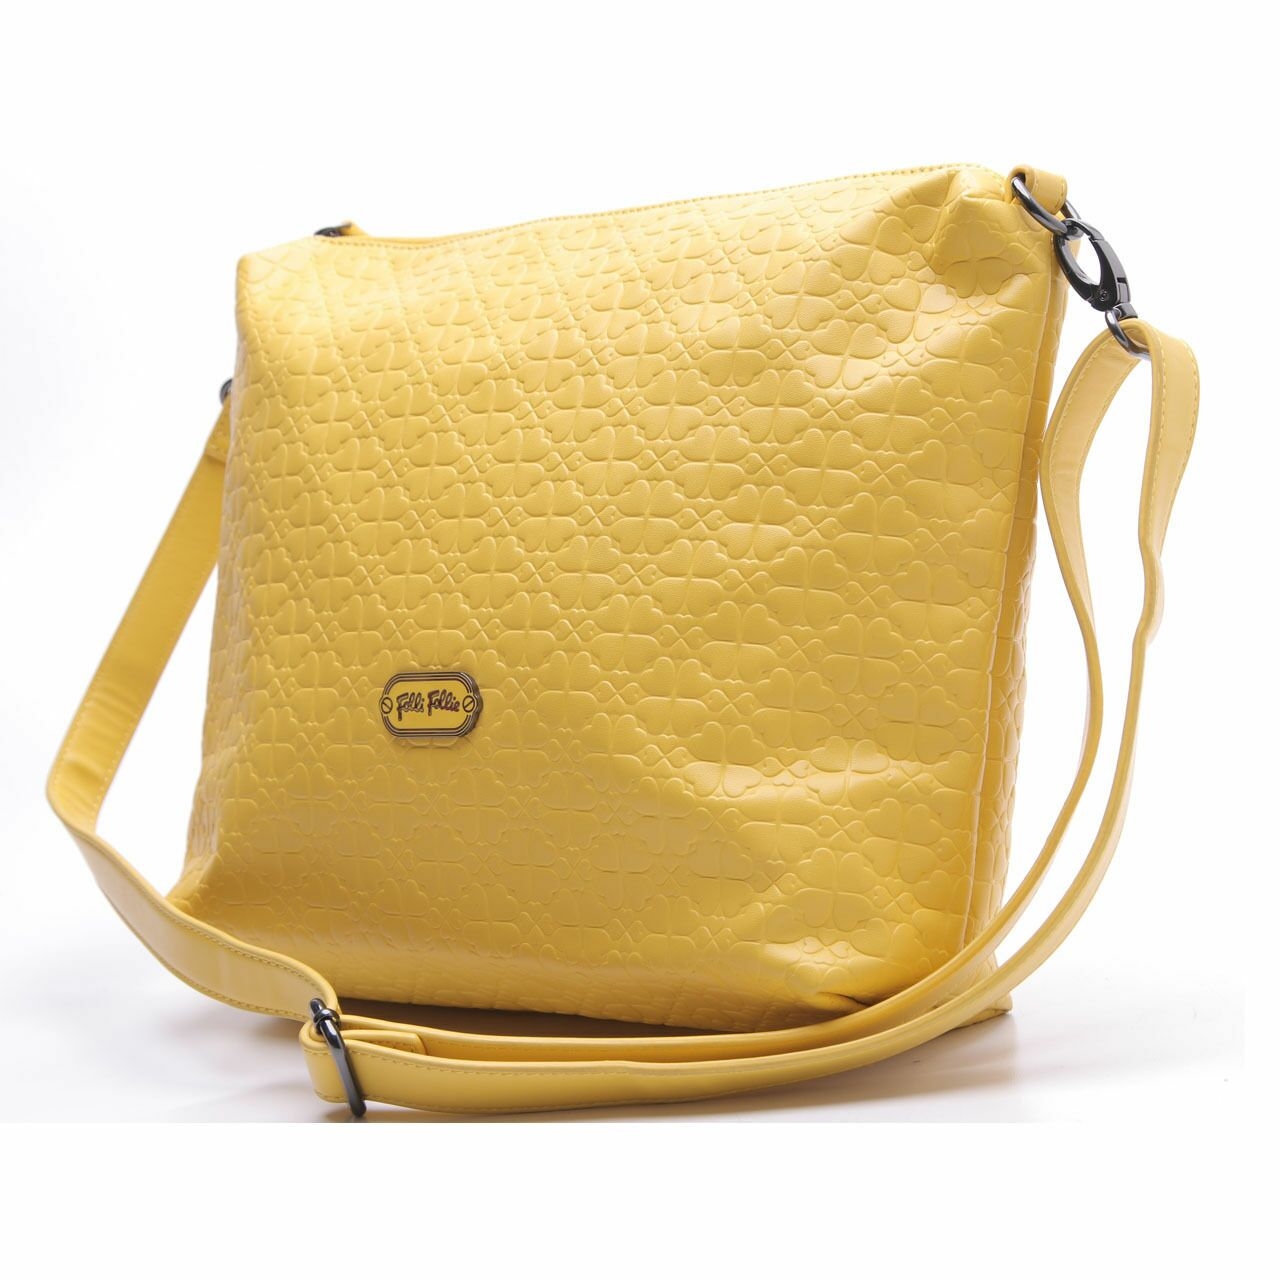 Folli Follie Yellow Sling Bag